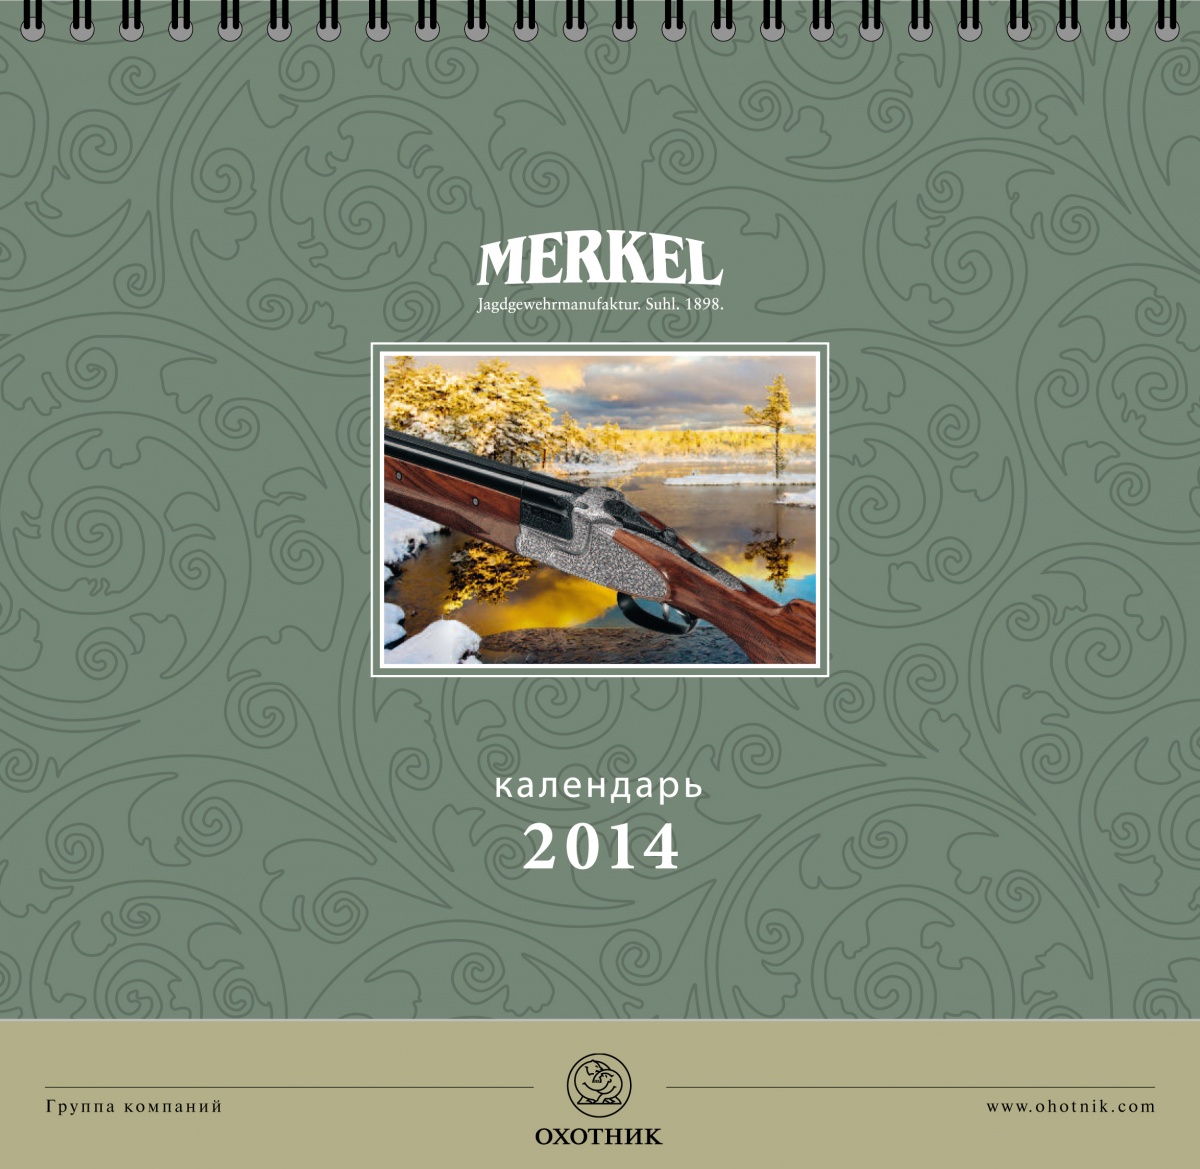 Merkel-cover1.jpg